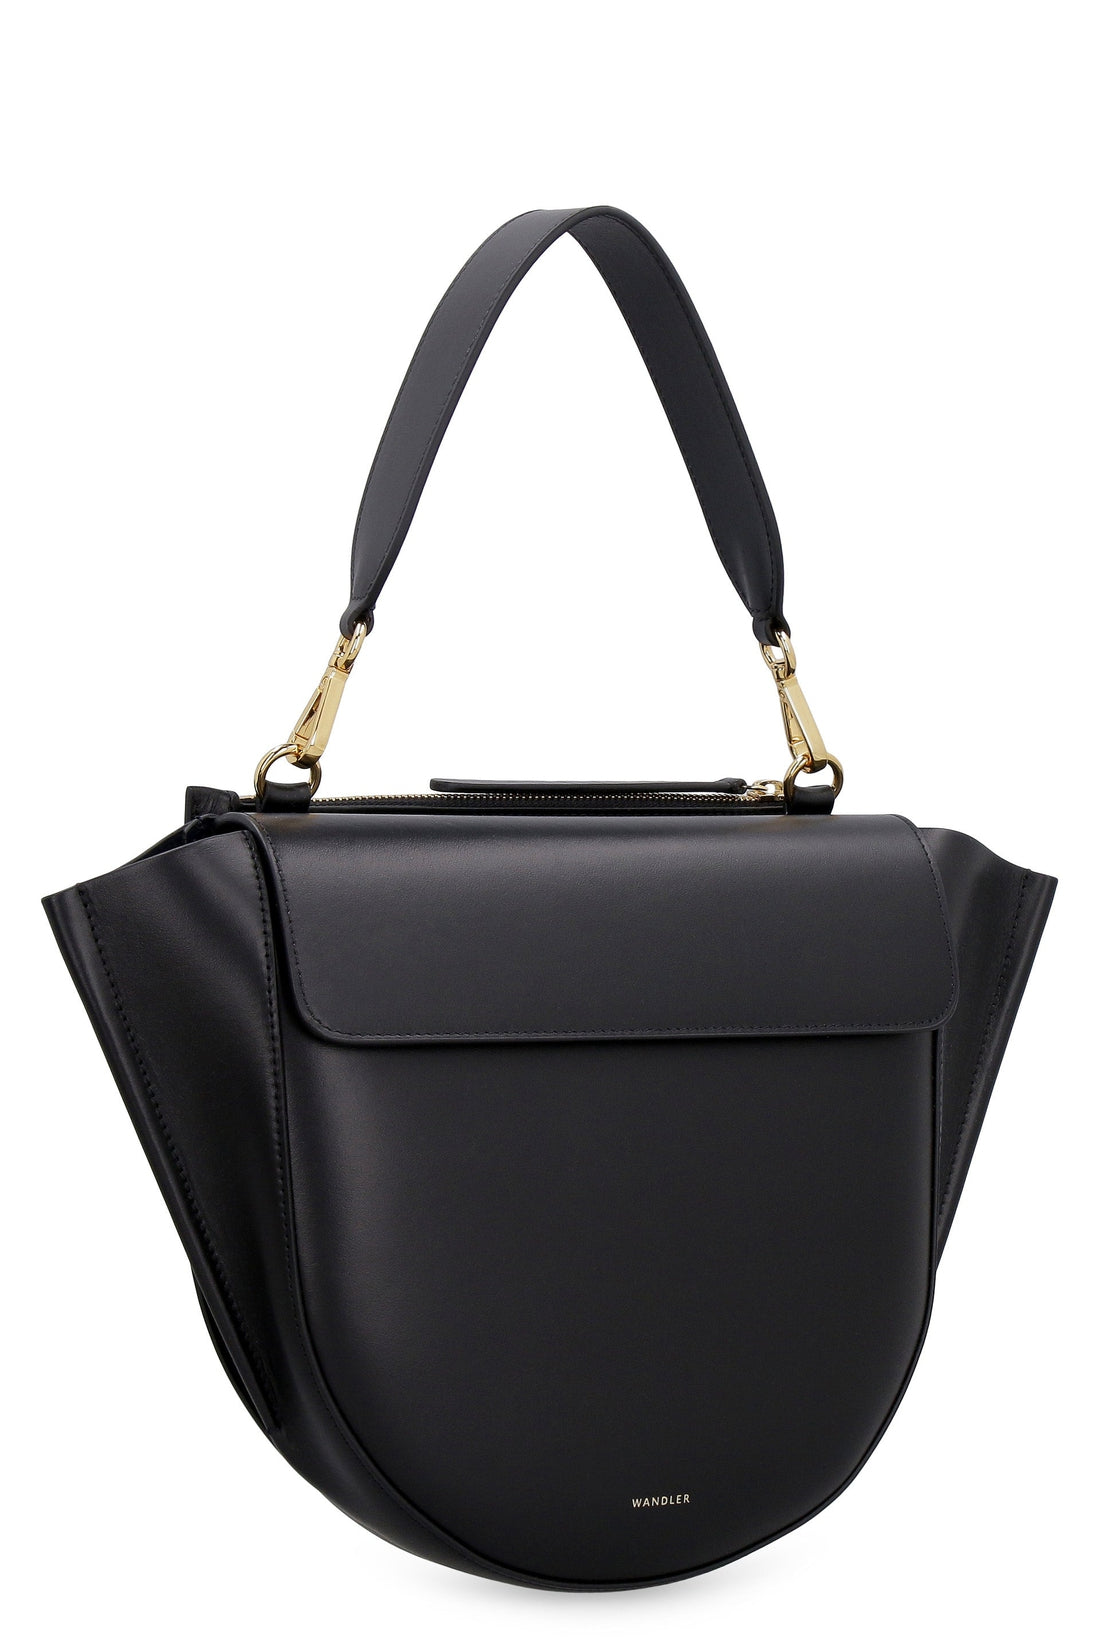 Wandler-OUTLET-SALE-Hortensia leather bag-ARCHIVIST